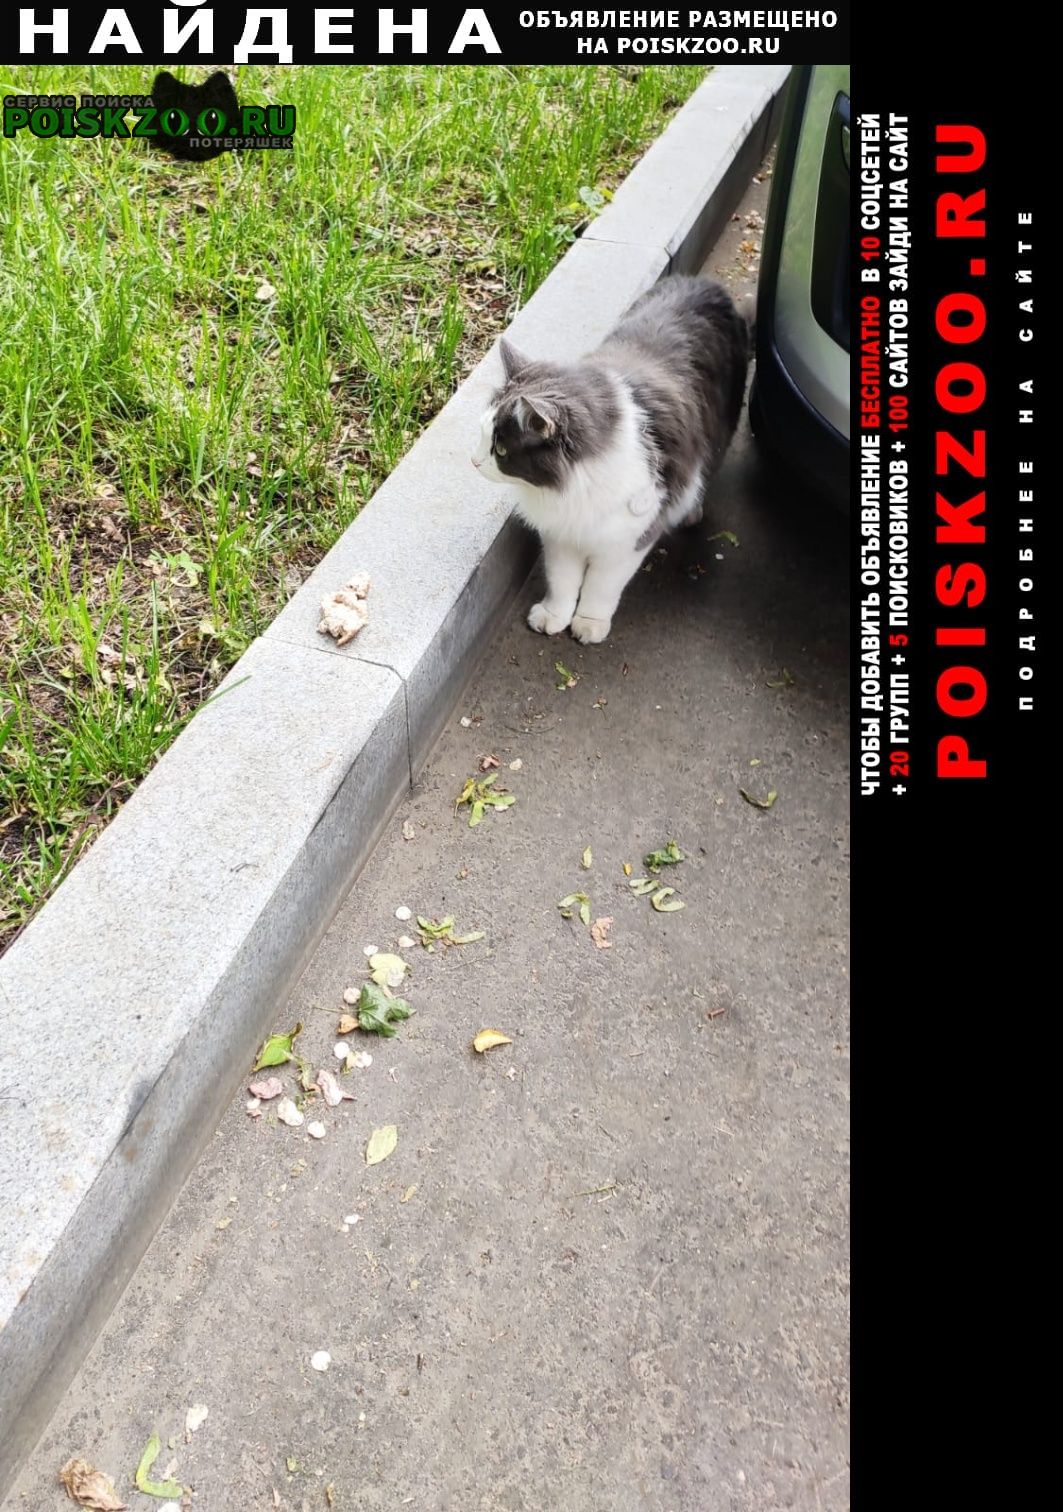 Москва Найдена кошка видели кошку